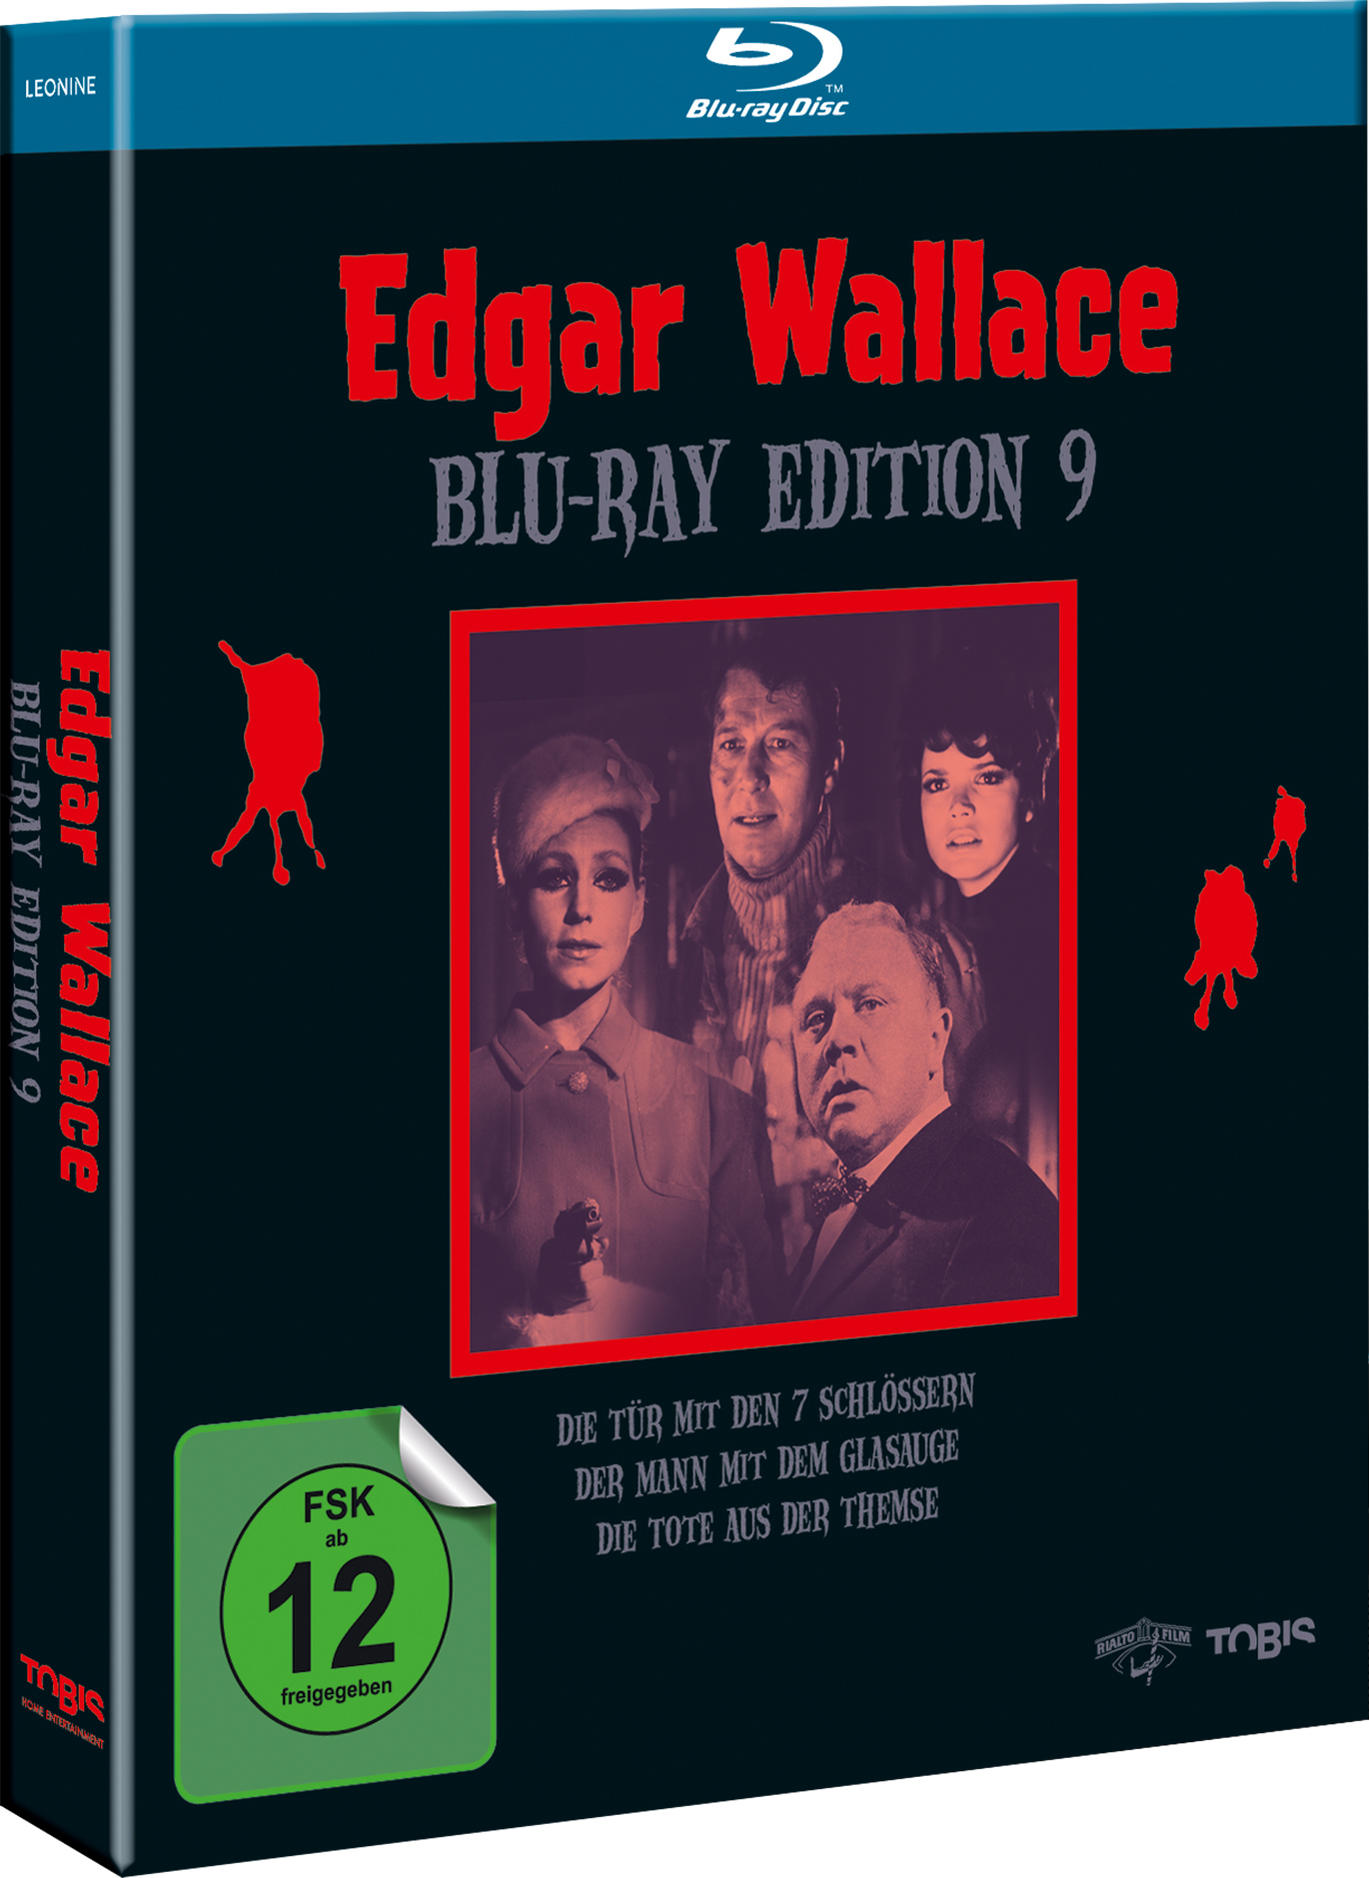 Edgar Wallace Blu-ray Edition 9 Blu-ray